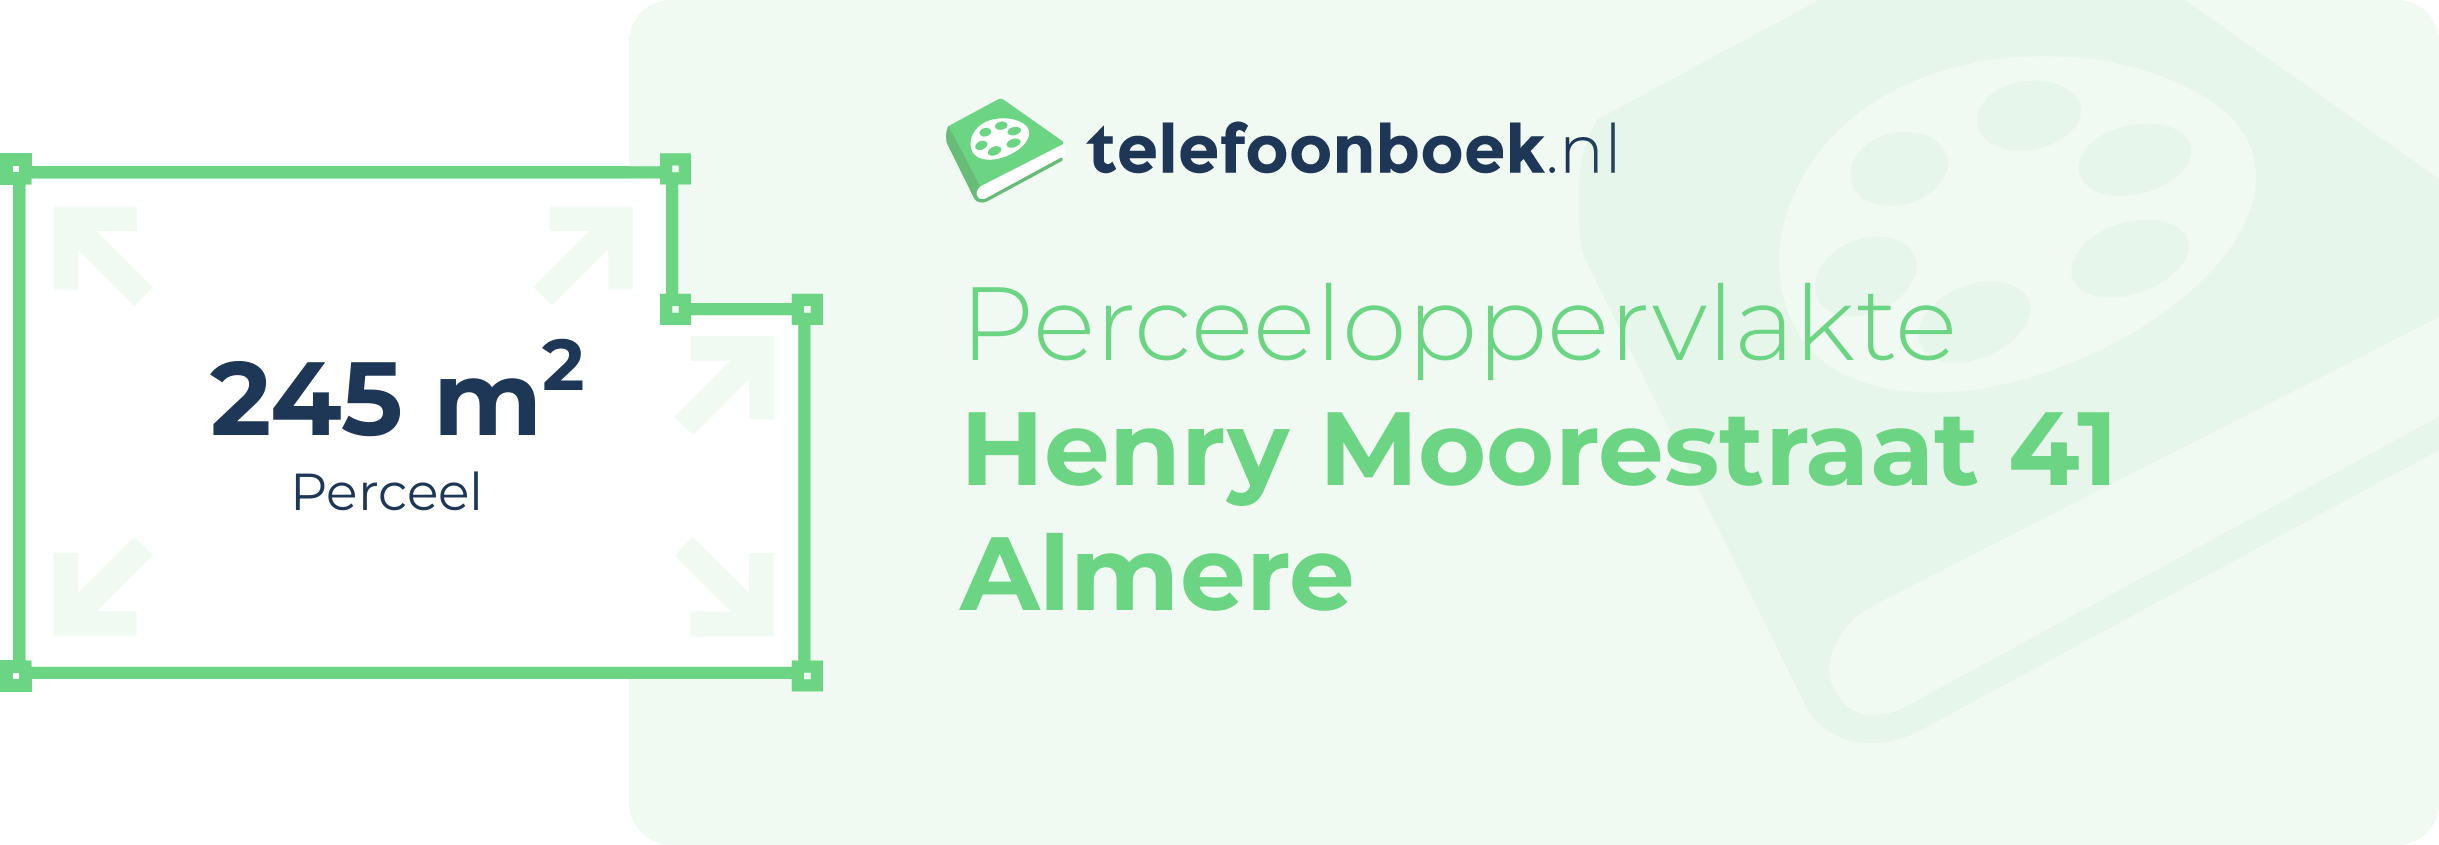 Perceeloppervlakte Henry Moorestraat 41 Almere